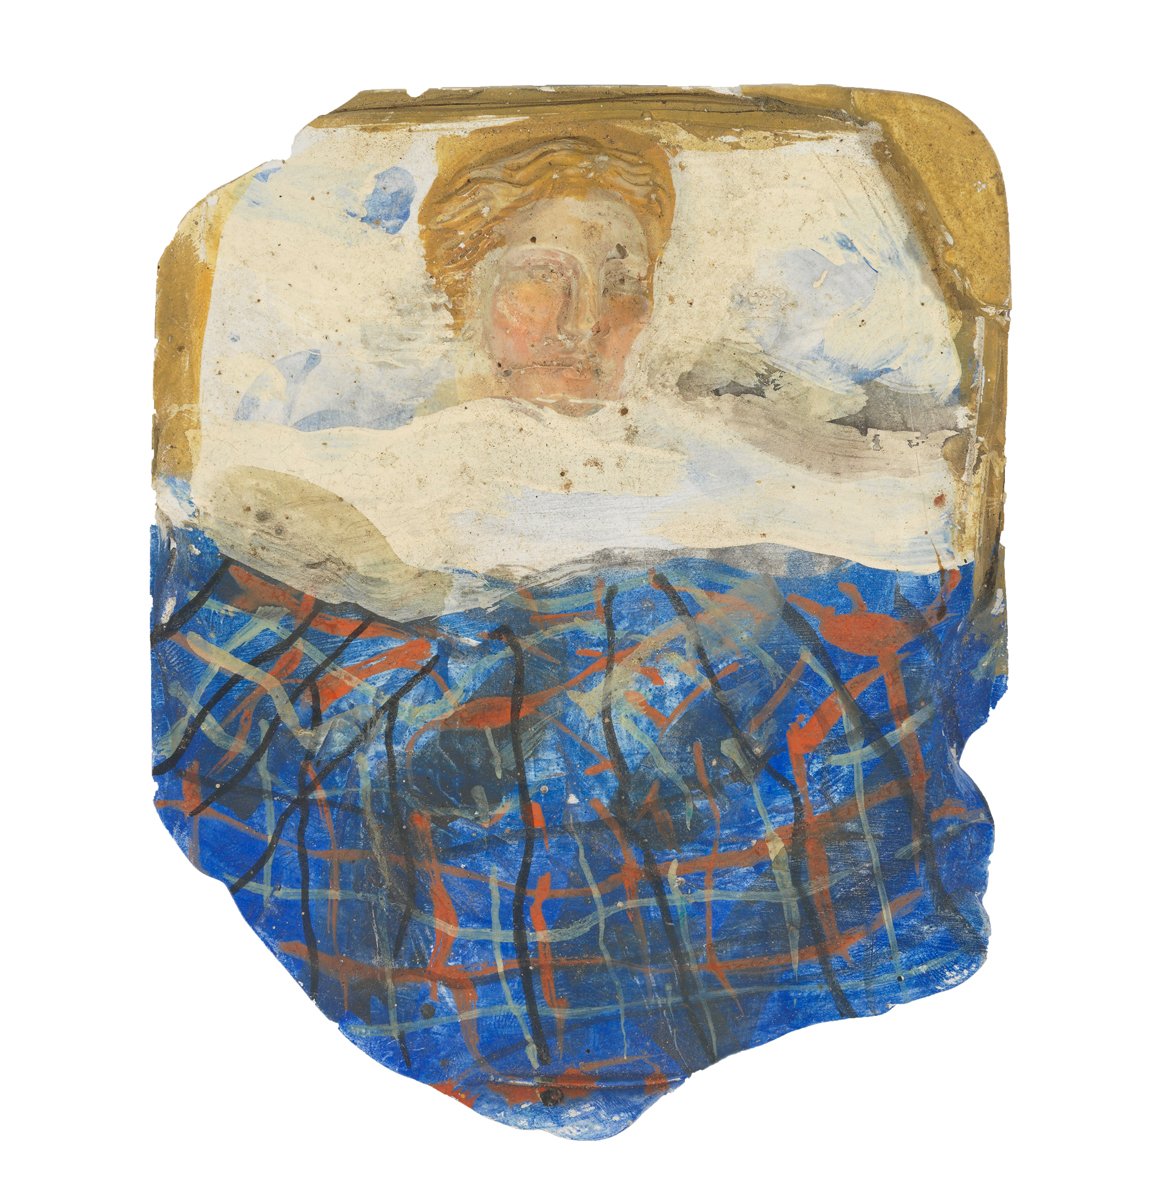 RAP "Virginia Woolf in Bed" plaster and watercolor on board (2008)